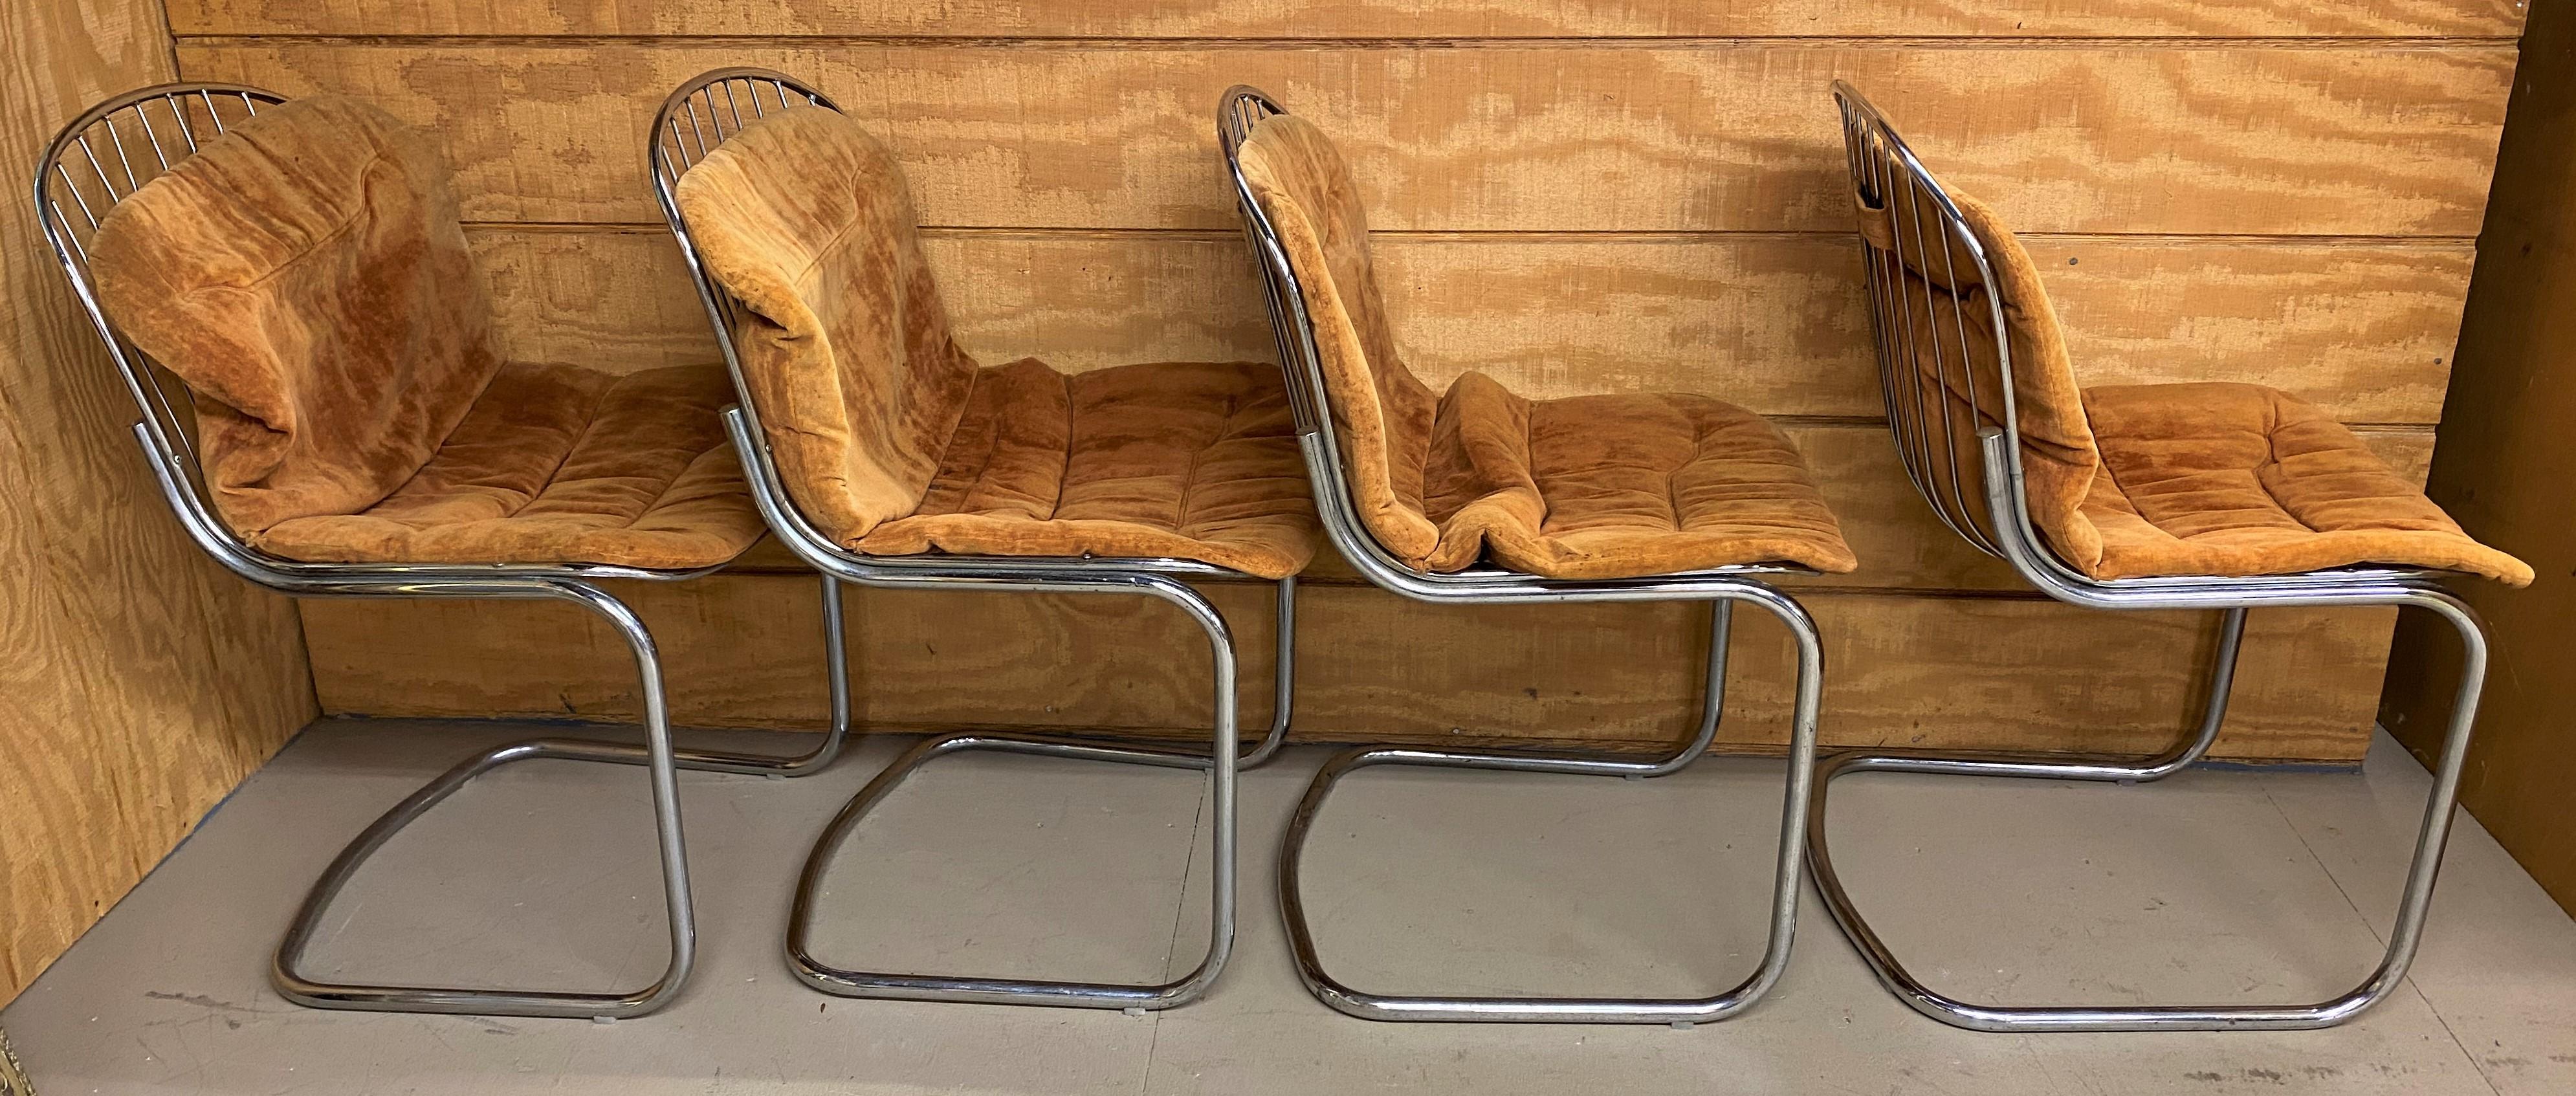 Plated Set of 4 Gastone Rinaldi Chrome Dining Chairs with Original Cushions circa 1970s